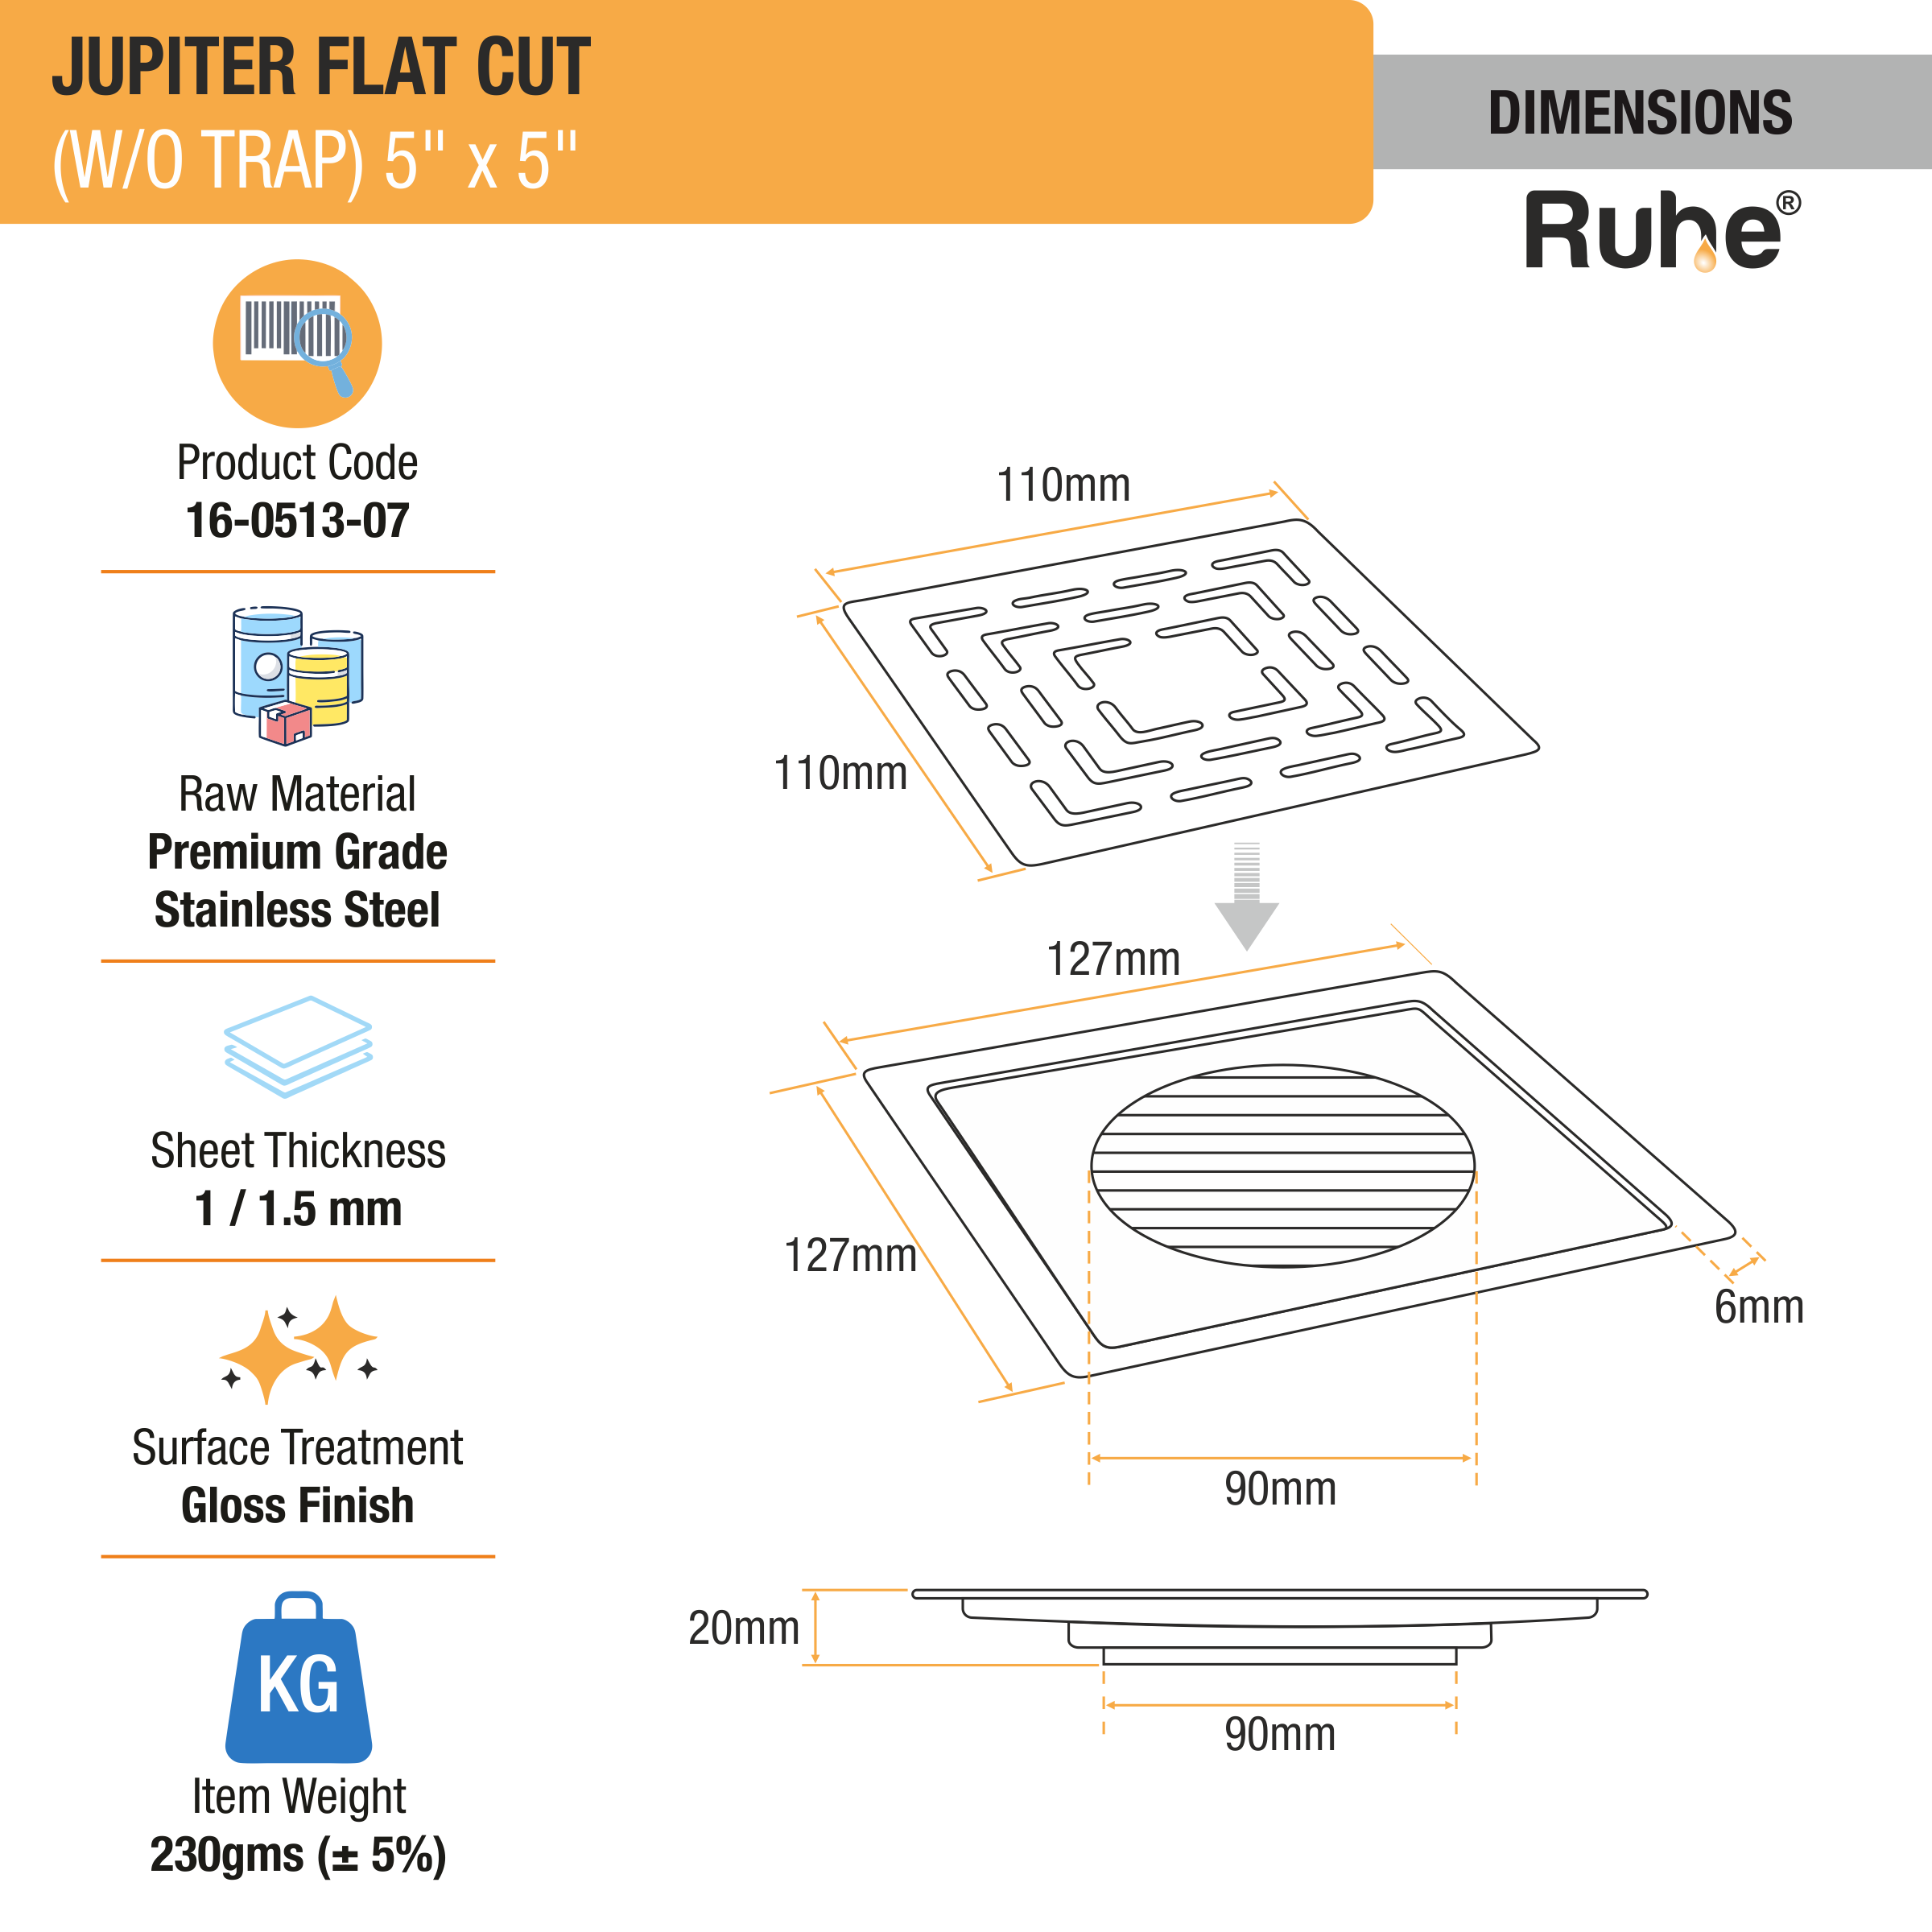 Jupiter Square Premium Flat Cut Floor Drain (5 x 5 Inches) dimensions and sizes